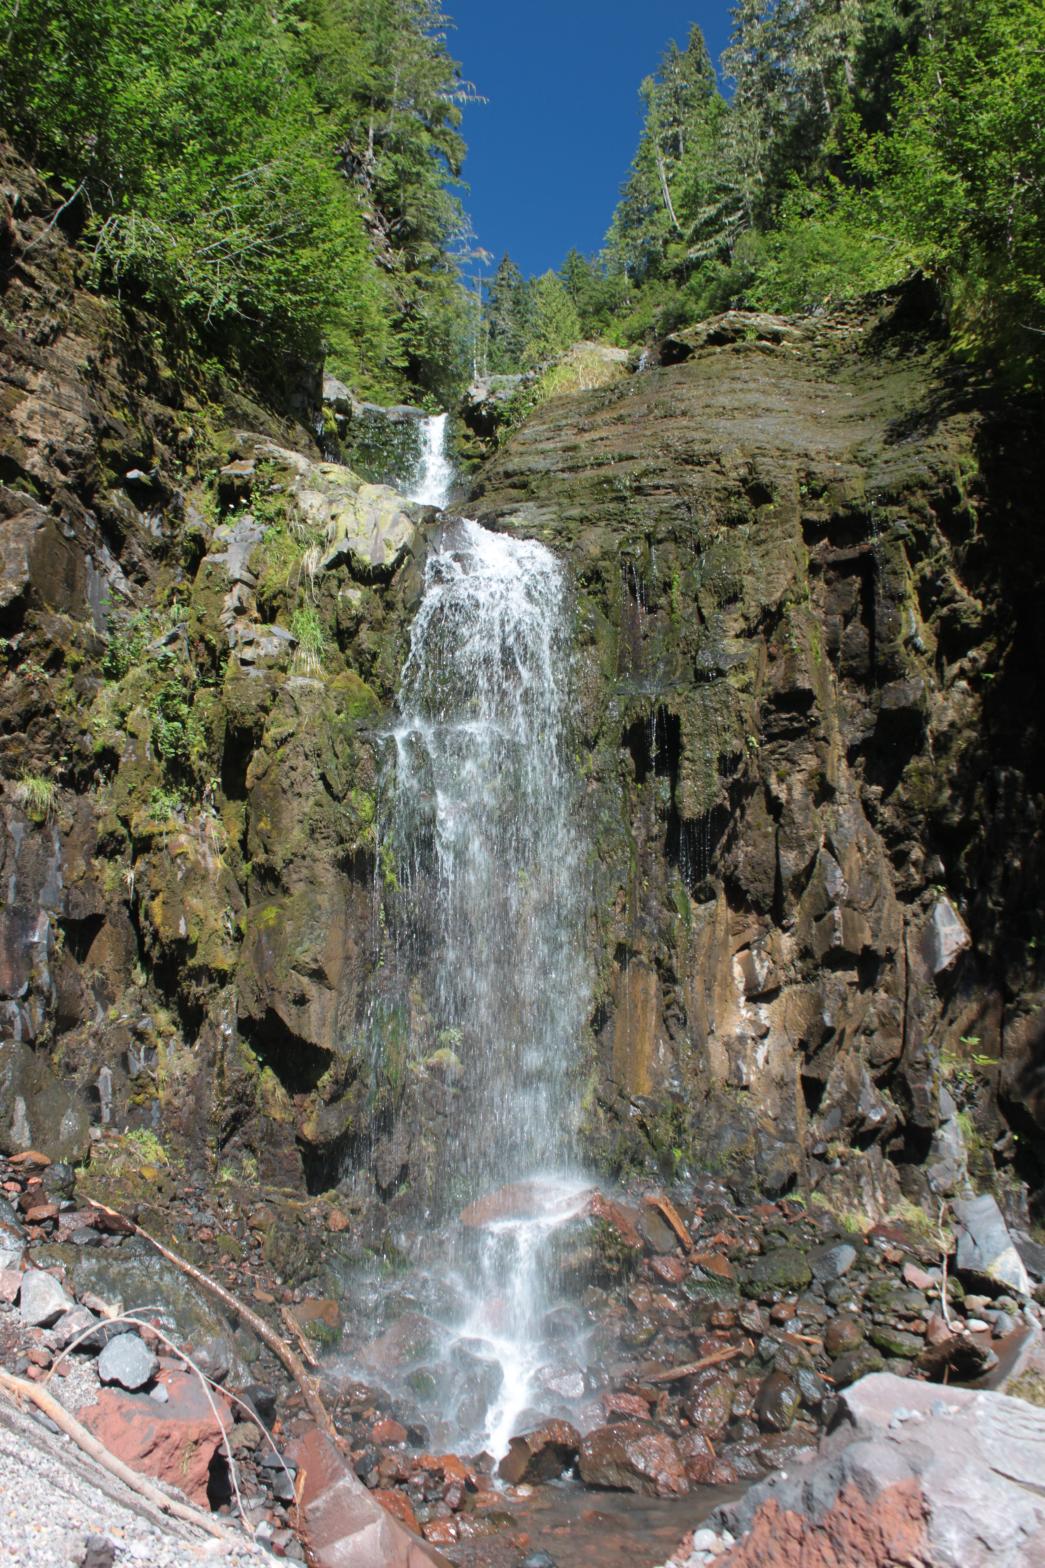 Main segment of the falls